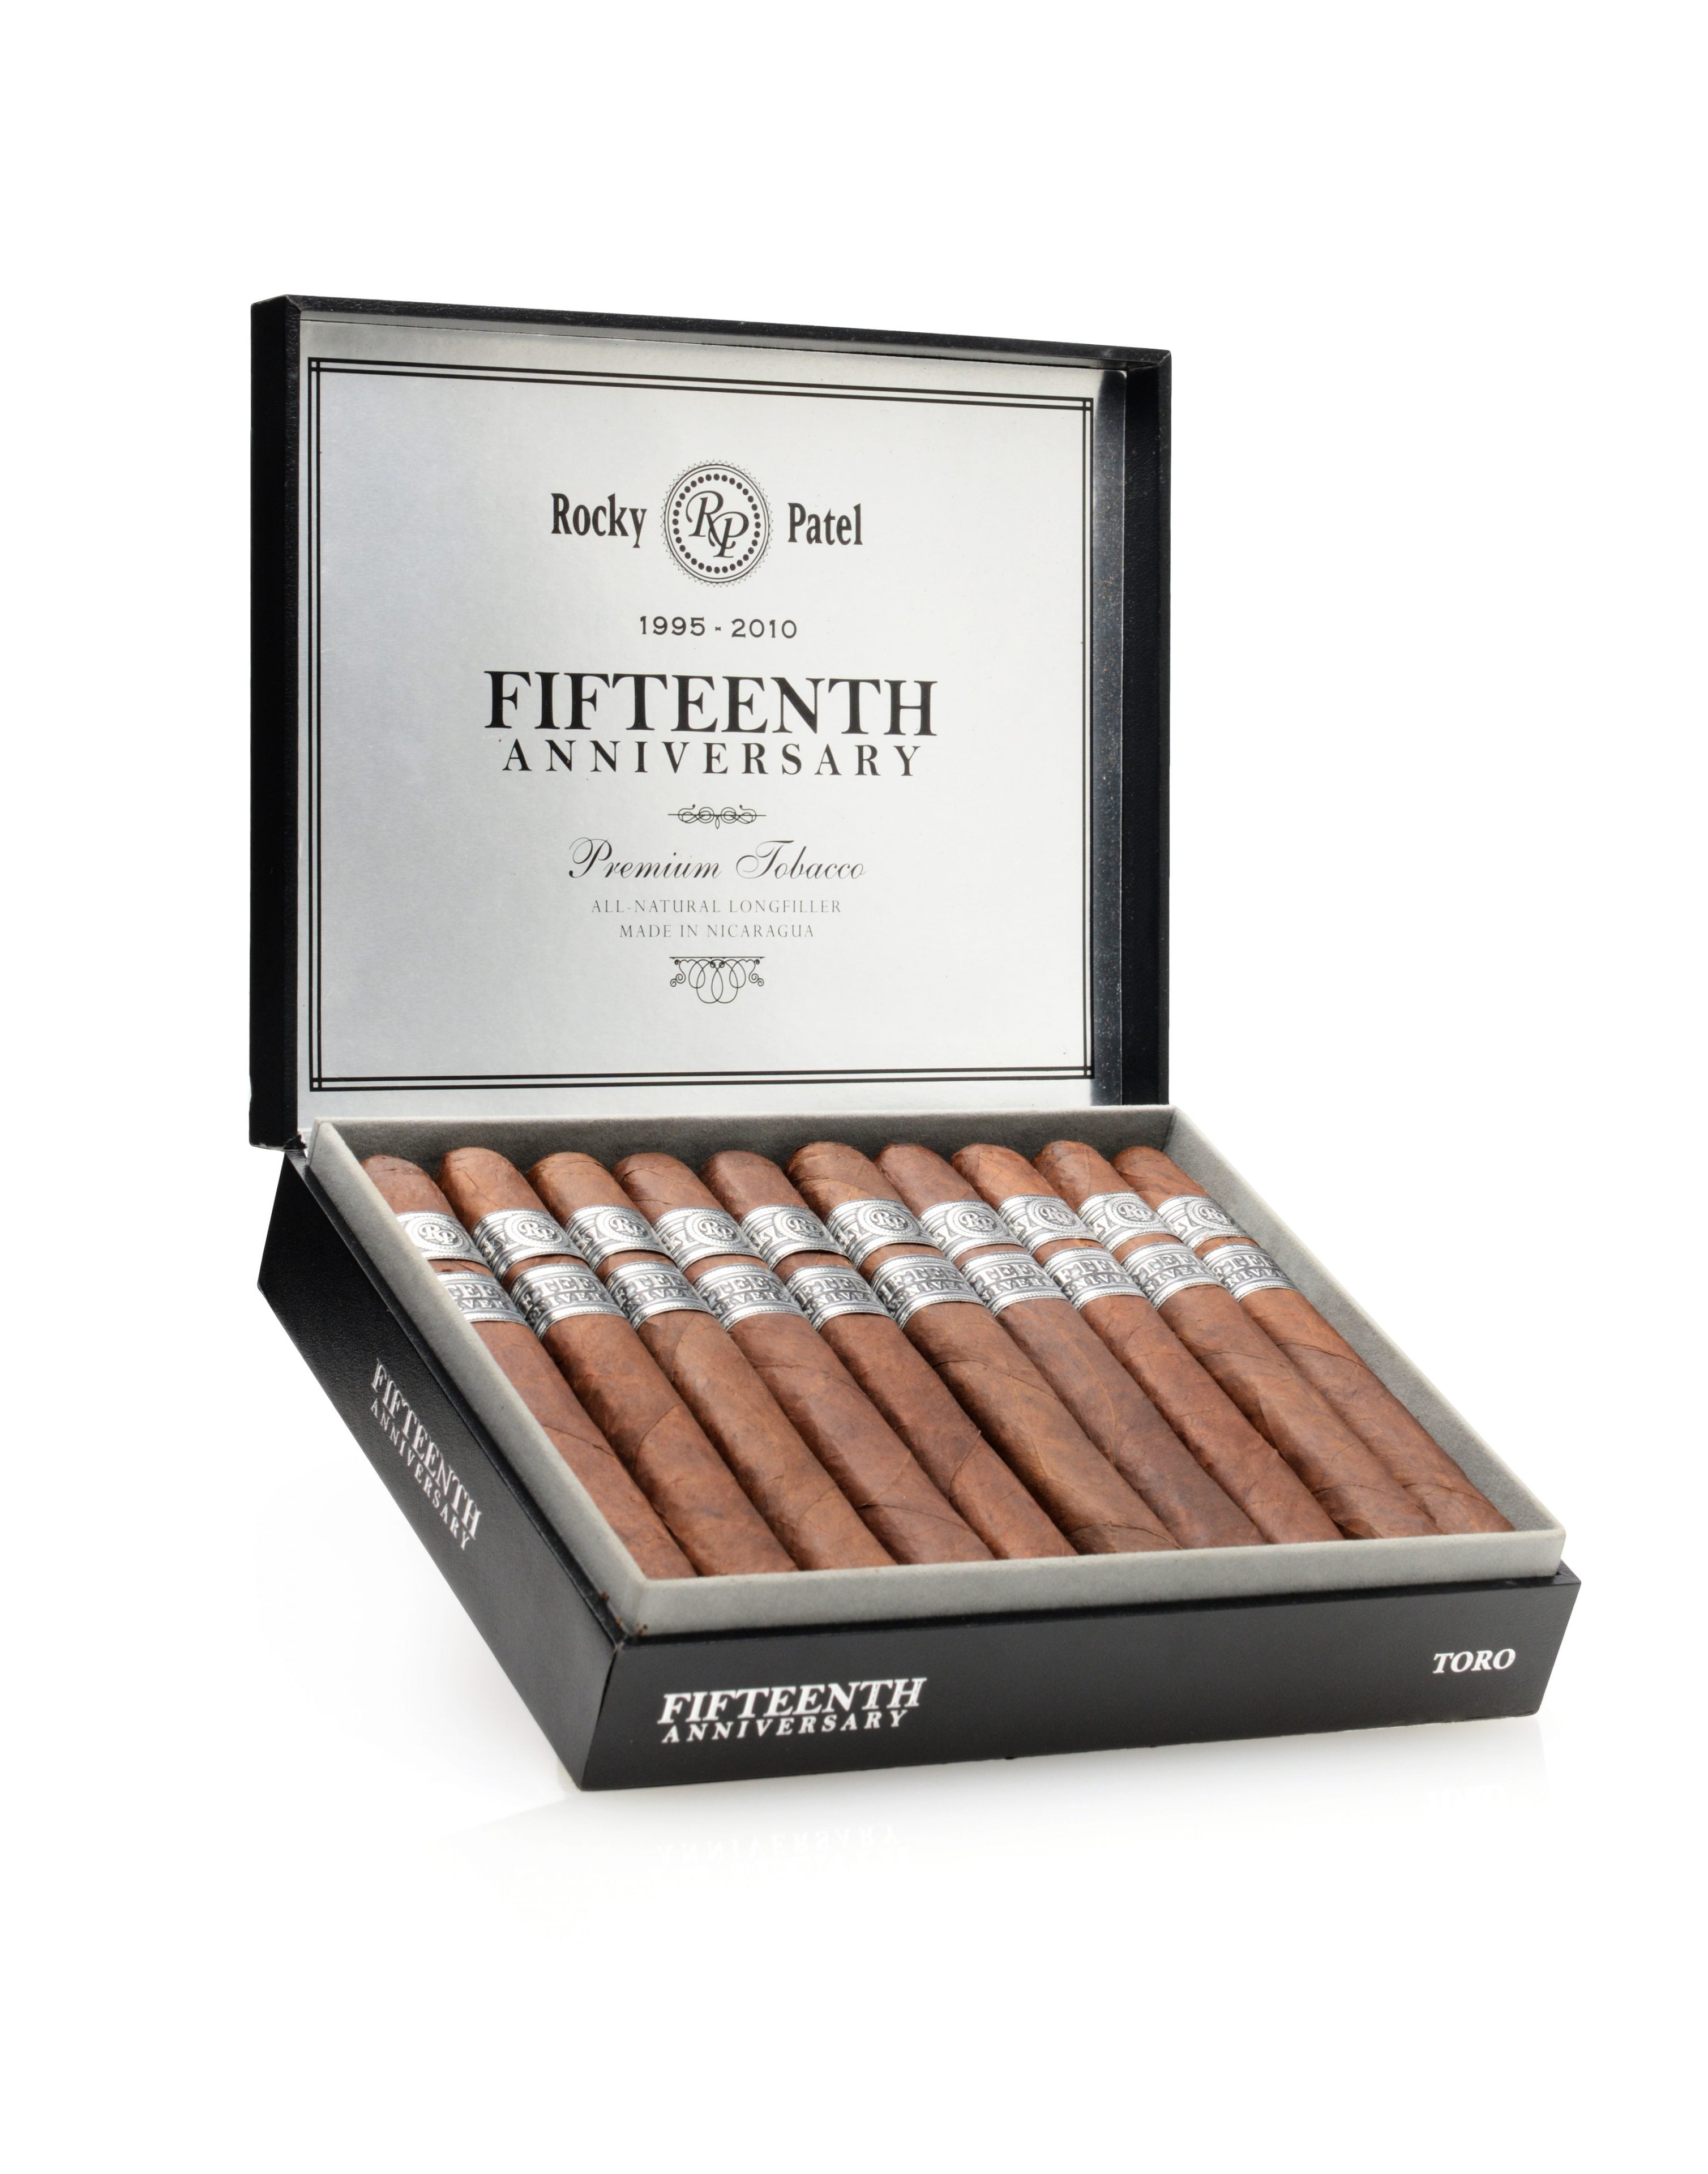 Cigar News: Rocky Patel 15th Gets a New Look